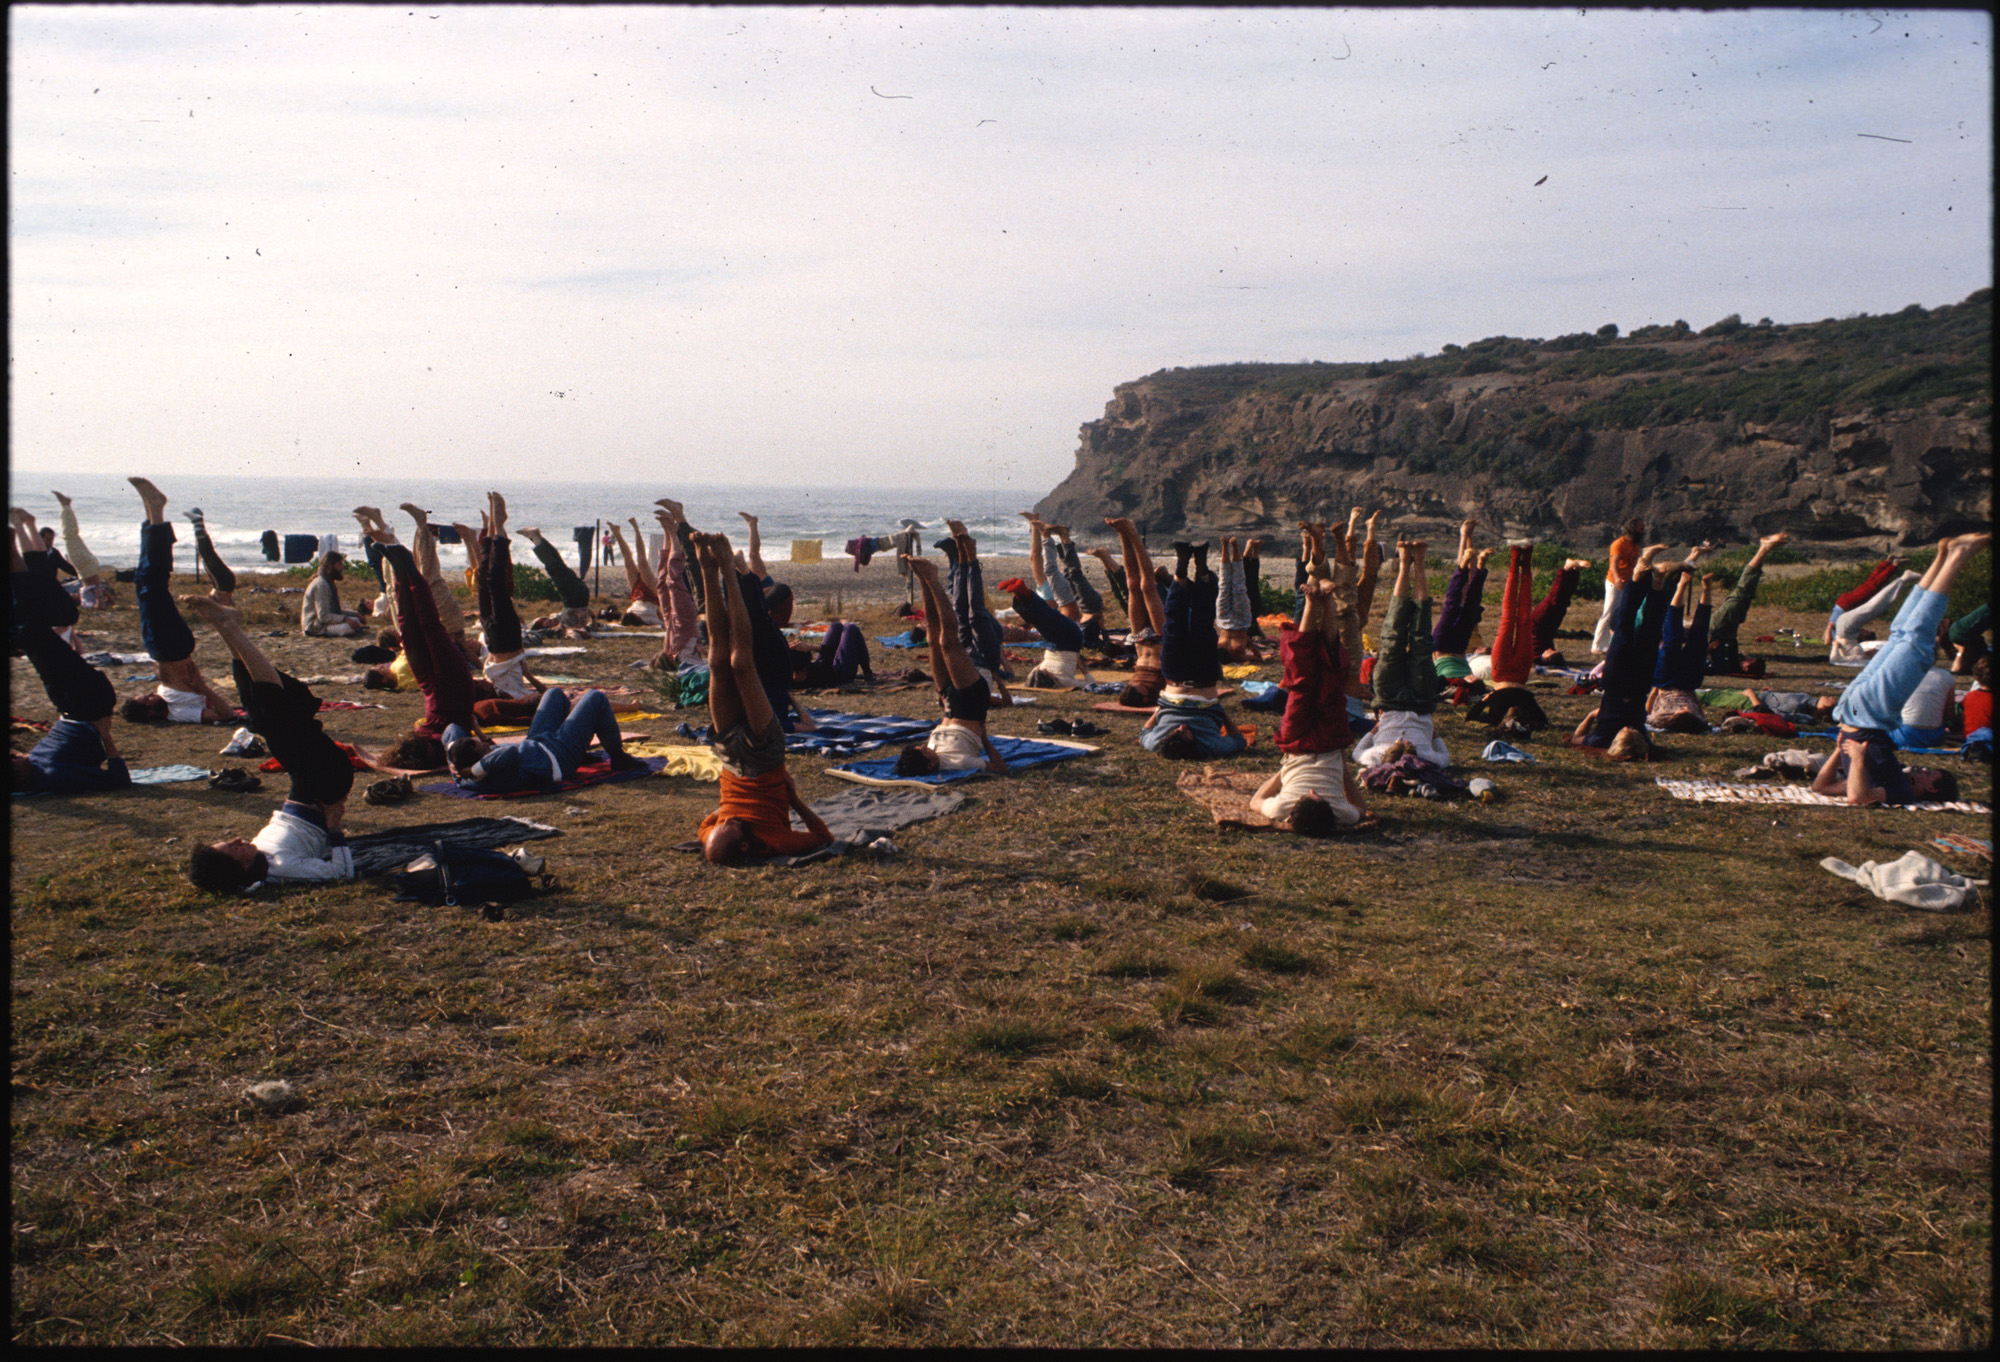 Yoga class at Ballina, Roger Marchant, c. 1975-1985